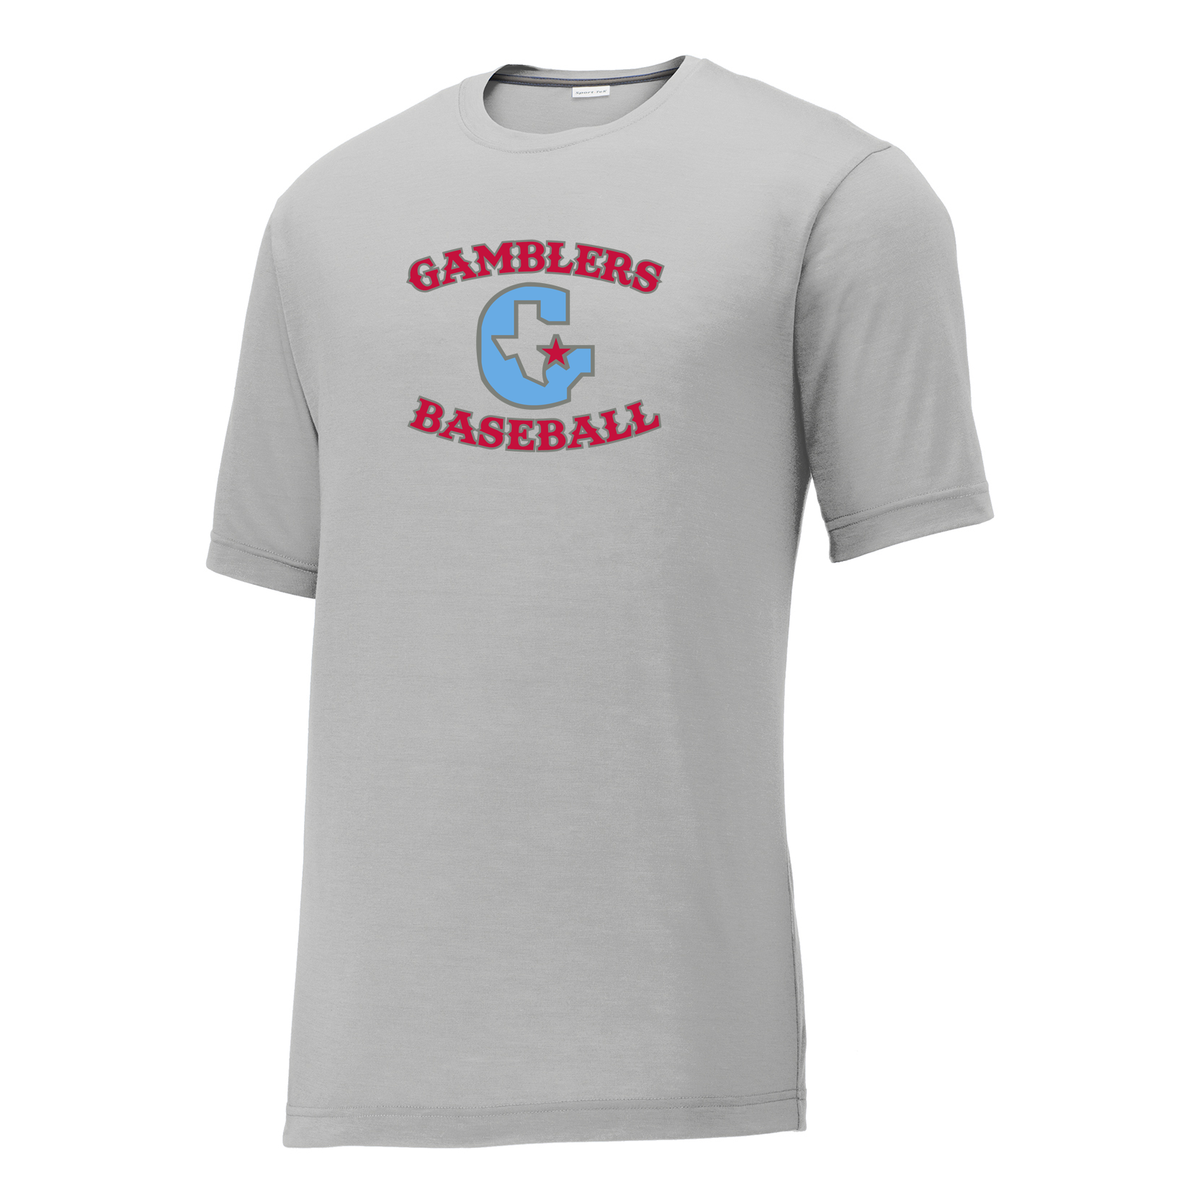 Gamblers Baseball  CottonTouch Performance T-Shirt